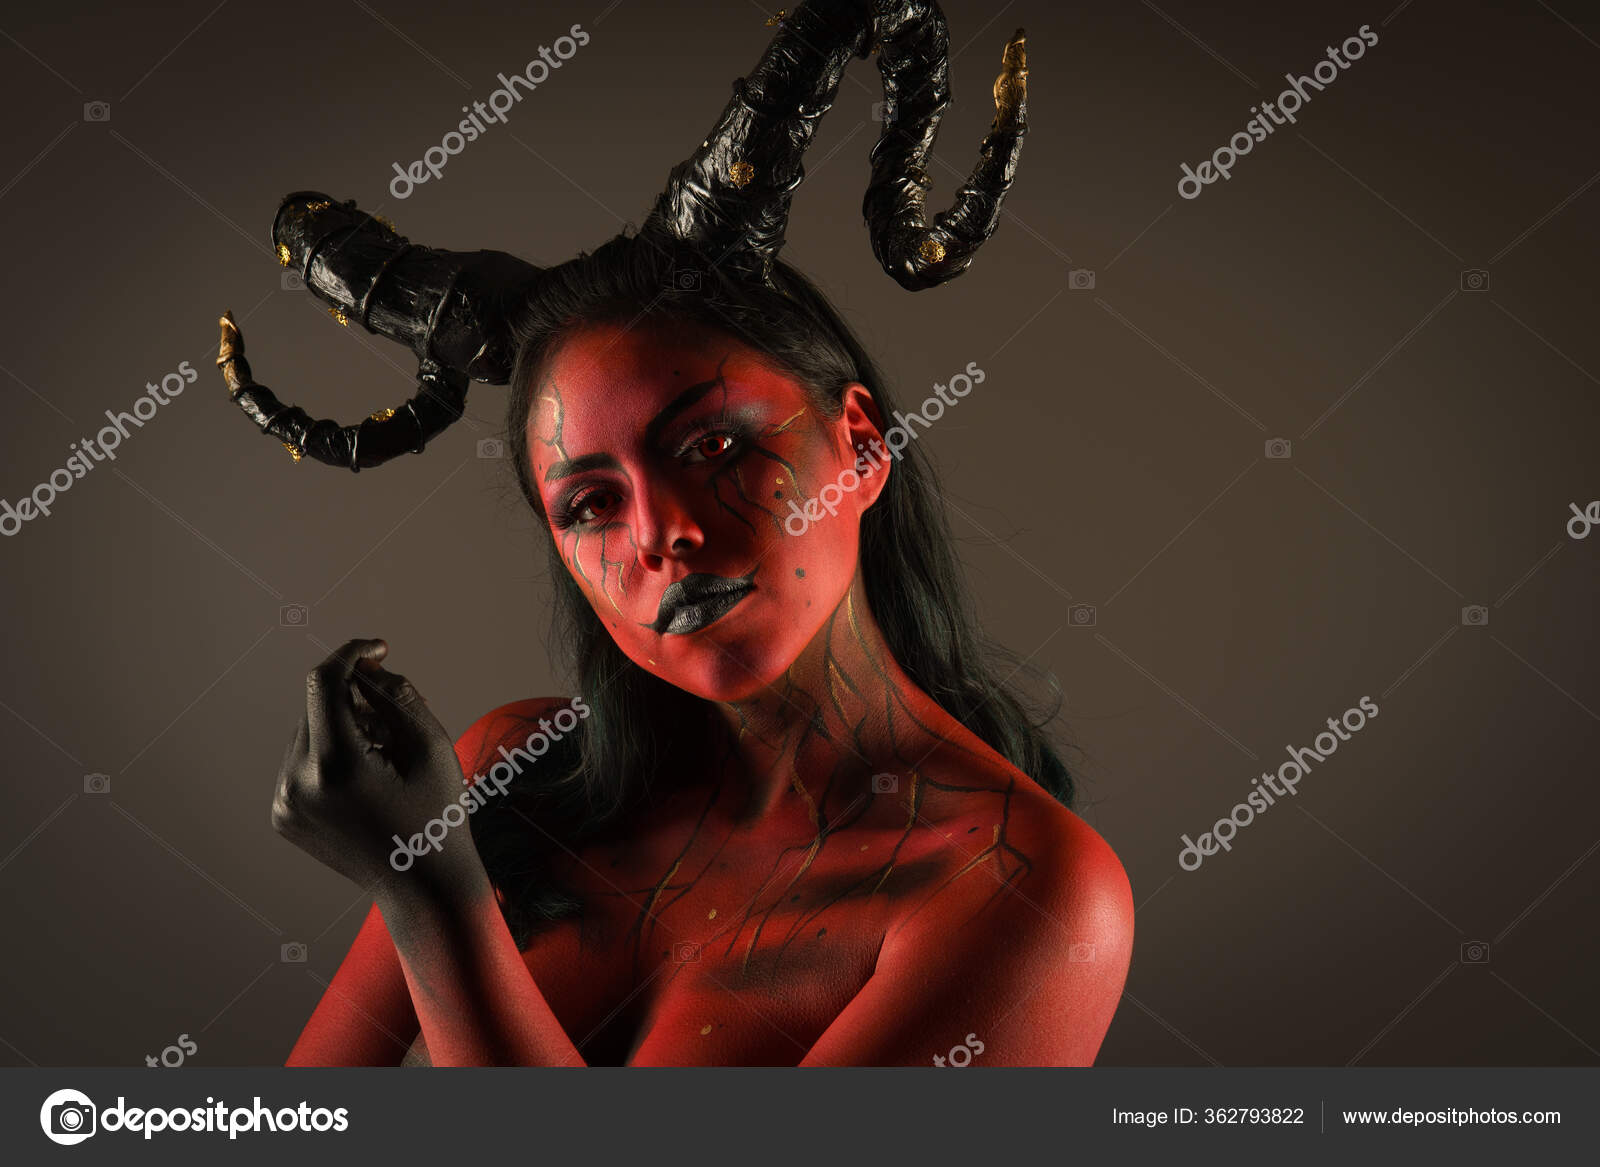 Black body painting (devil)